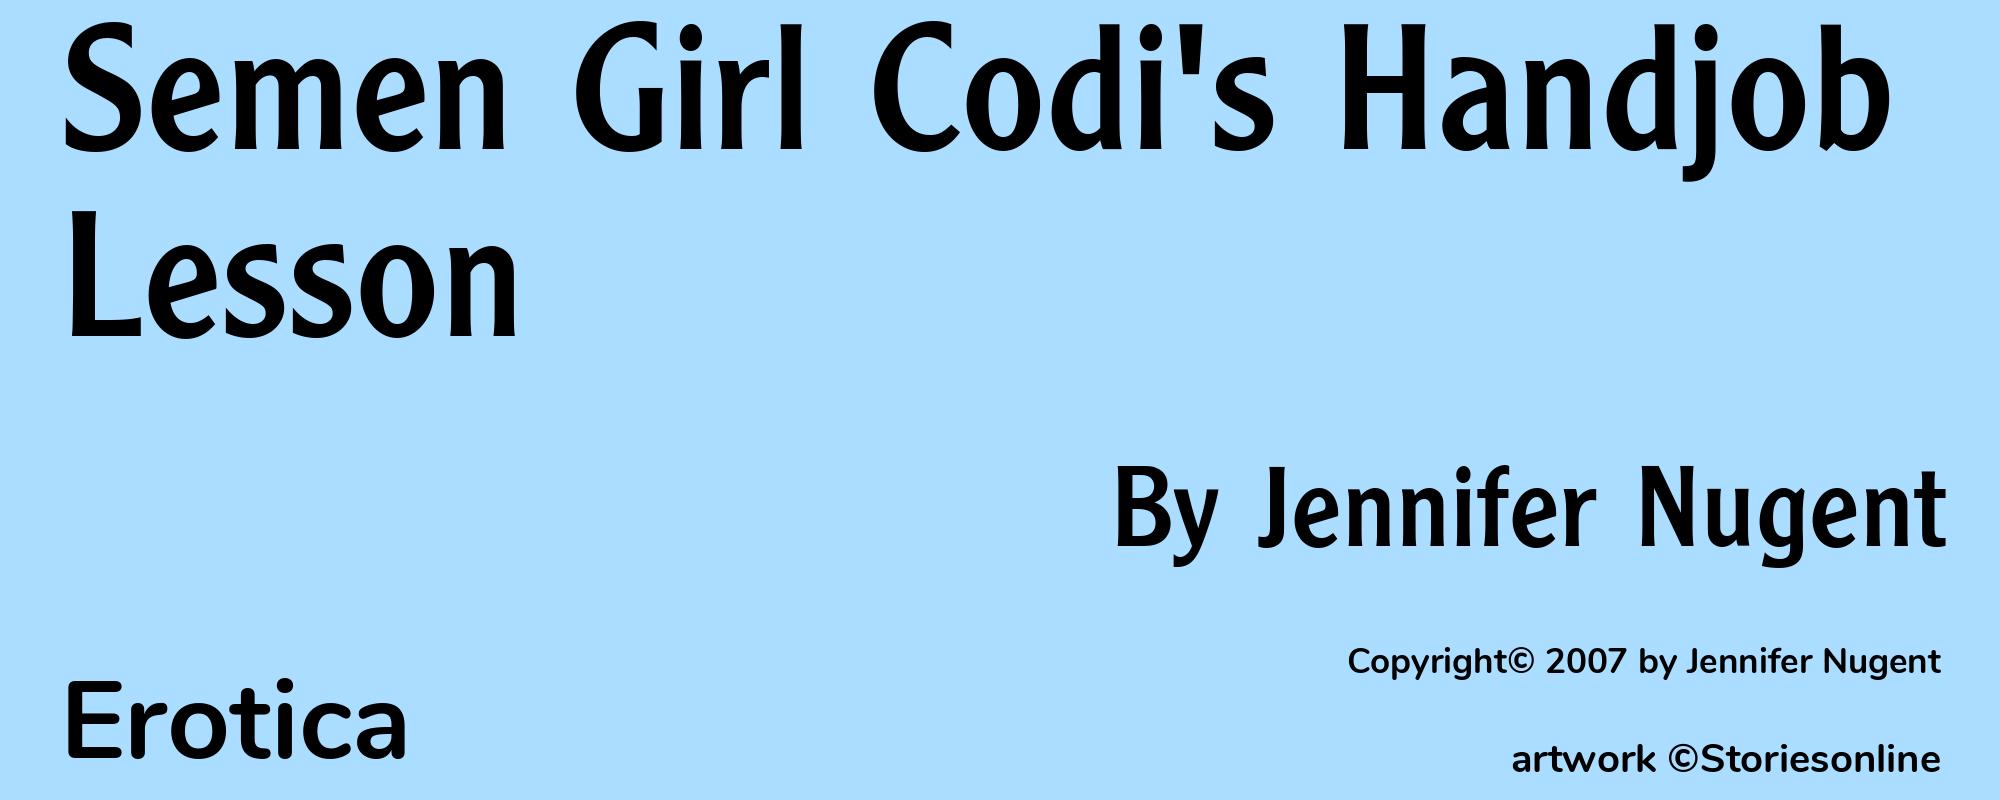 Semen Girl Codi's Handjob Lesson - Cover